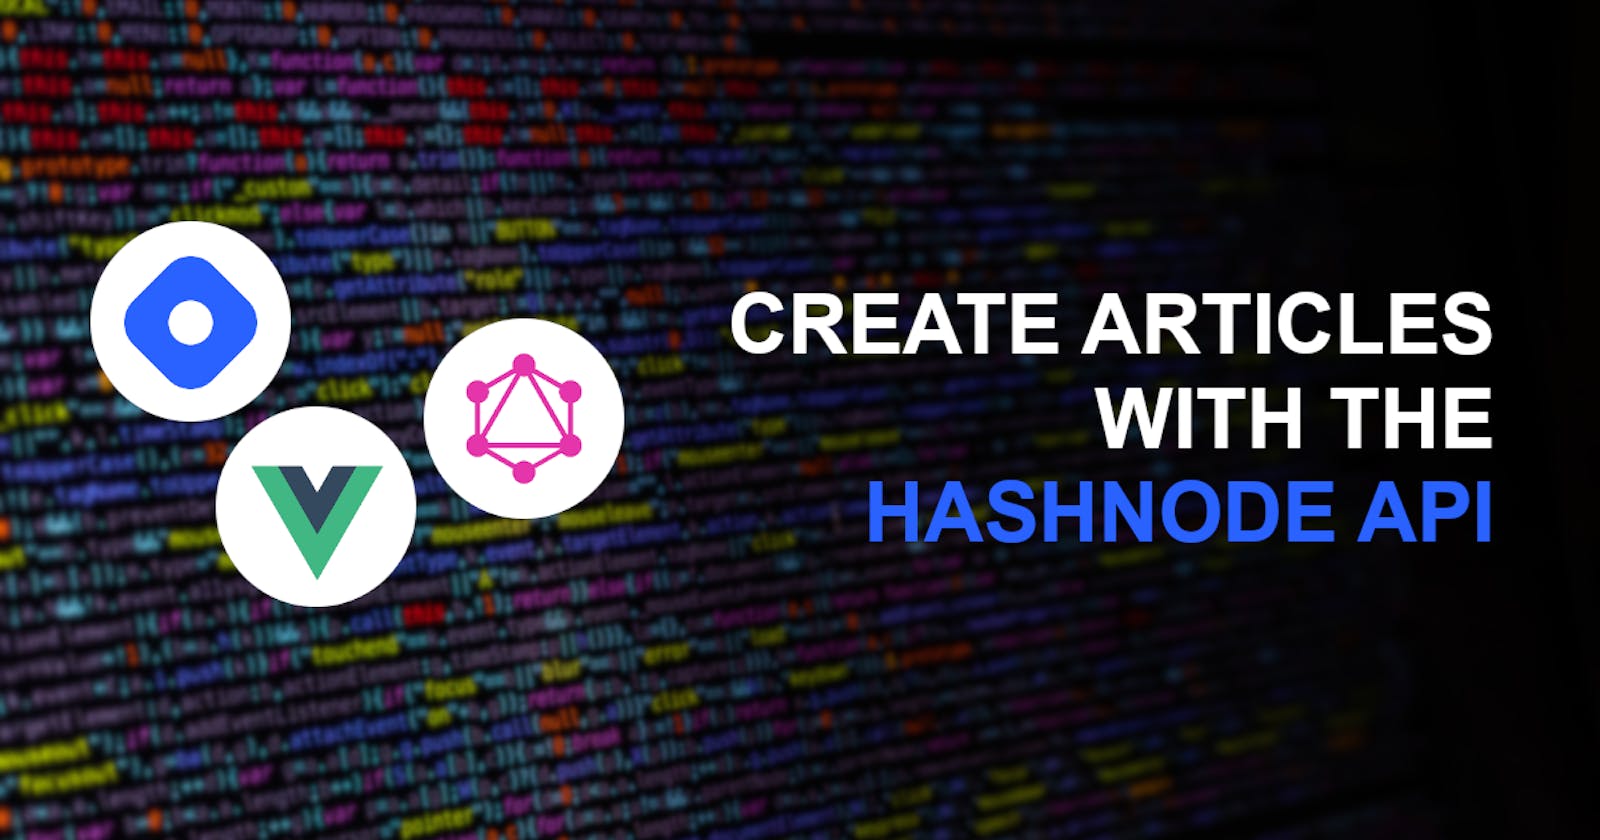 I wrote this article using the Hashnode API! Here's how...